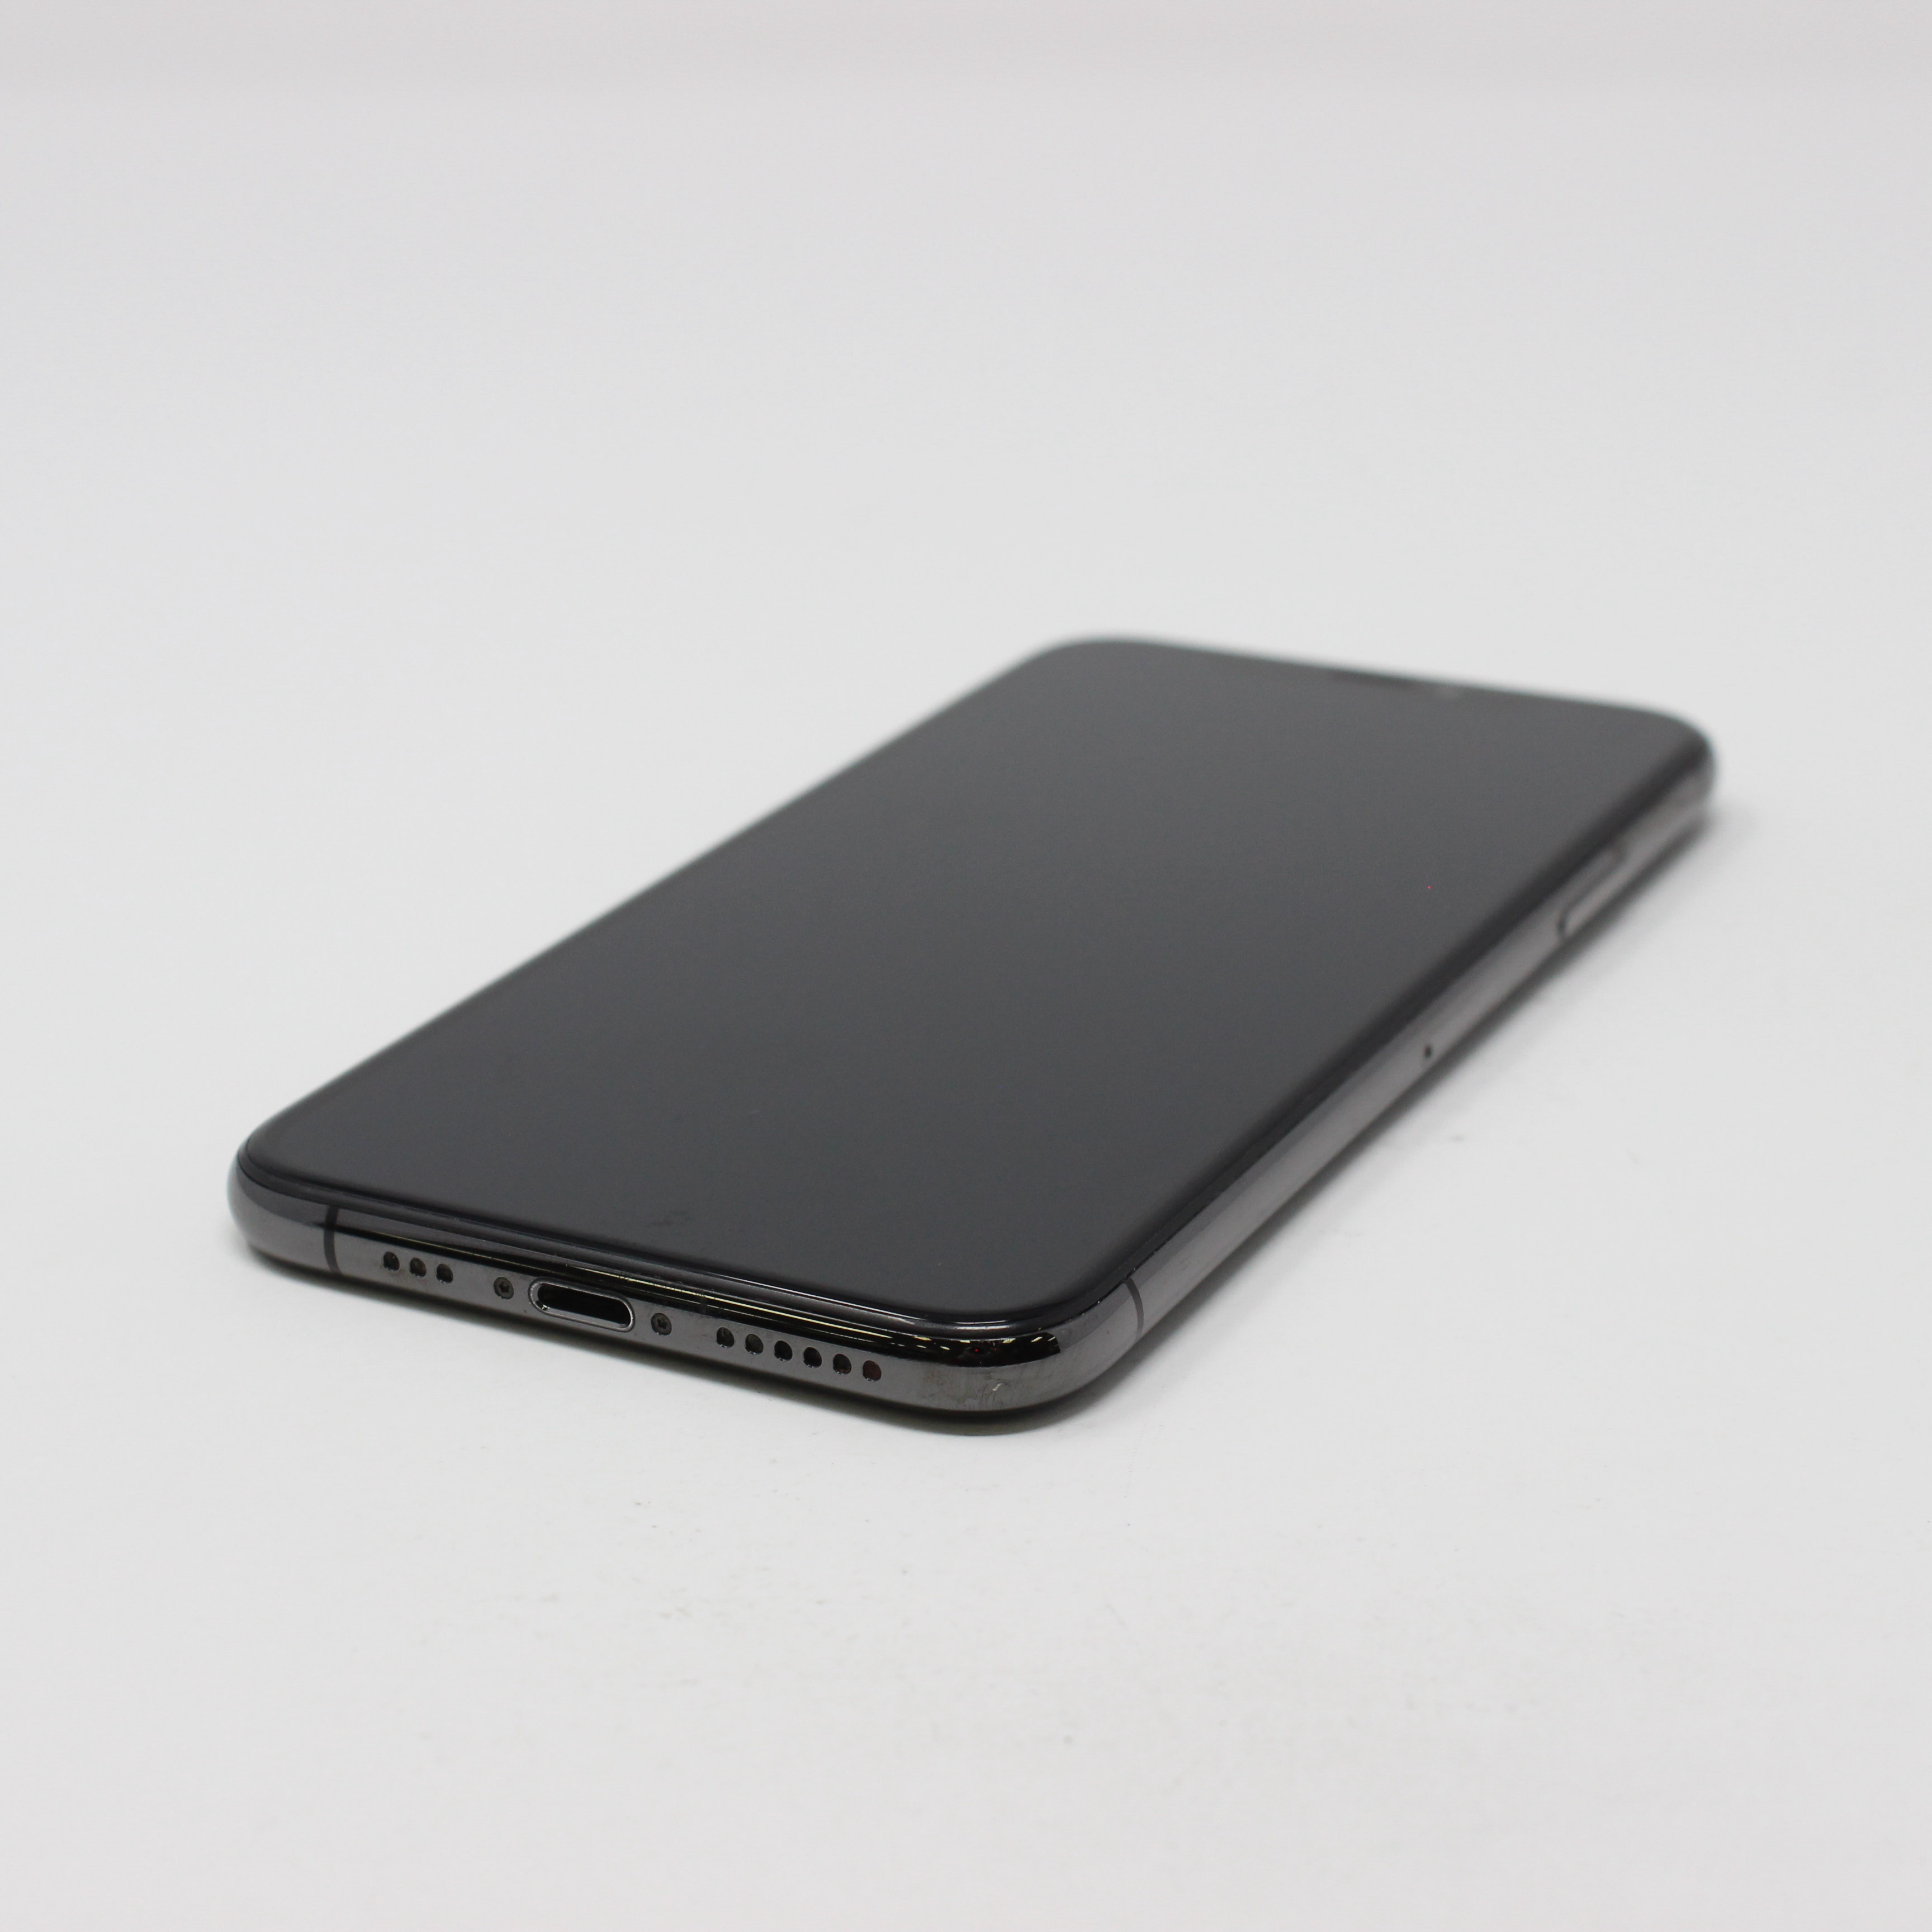 iPhone XS 256GB Space Gray - Unlocked For Sale | UpTradeit.com